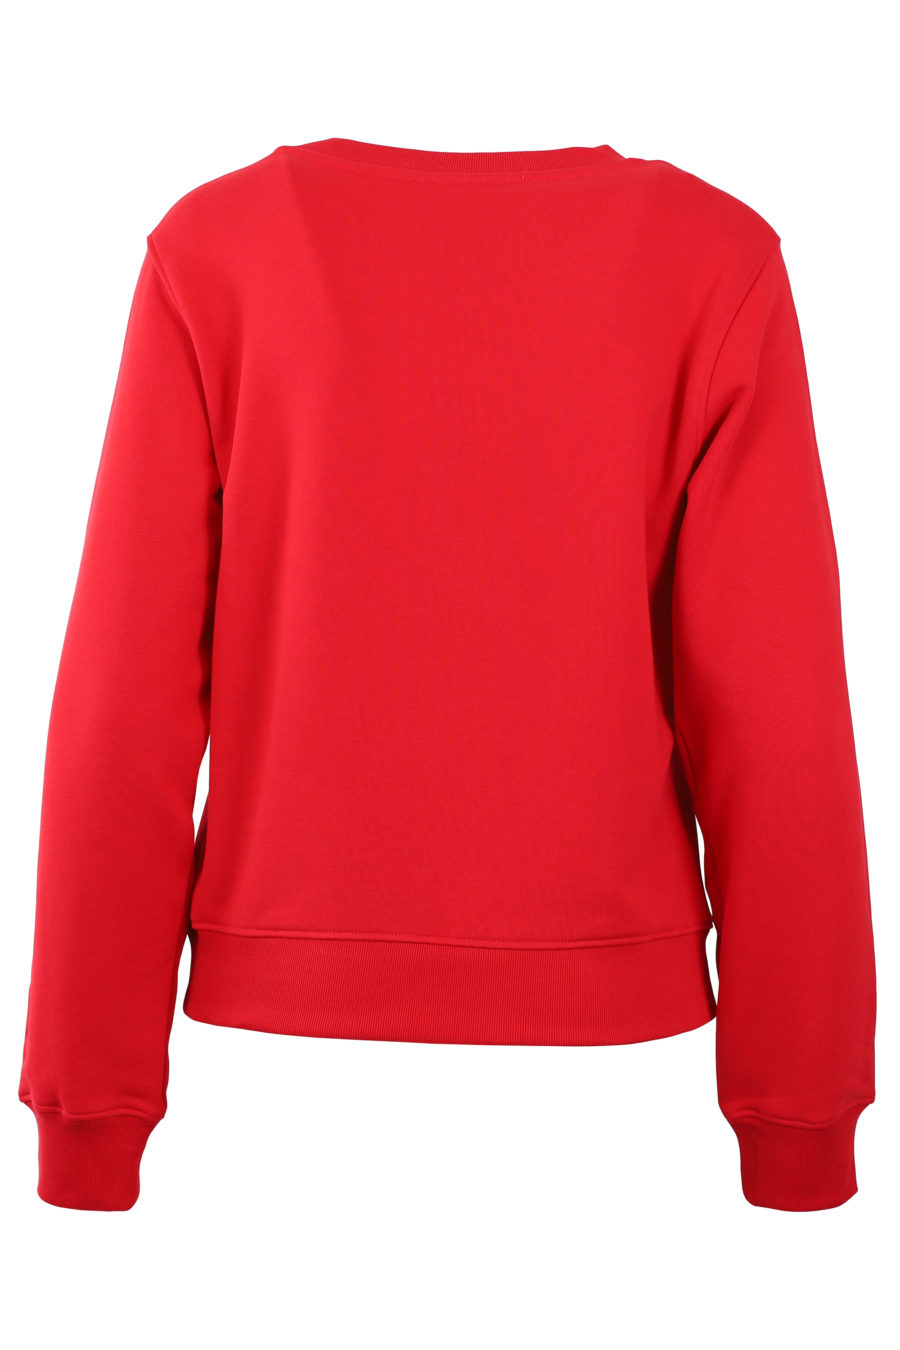 Rotes Sweatshirt mit schwarzem Logo - IMG 9244